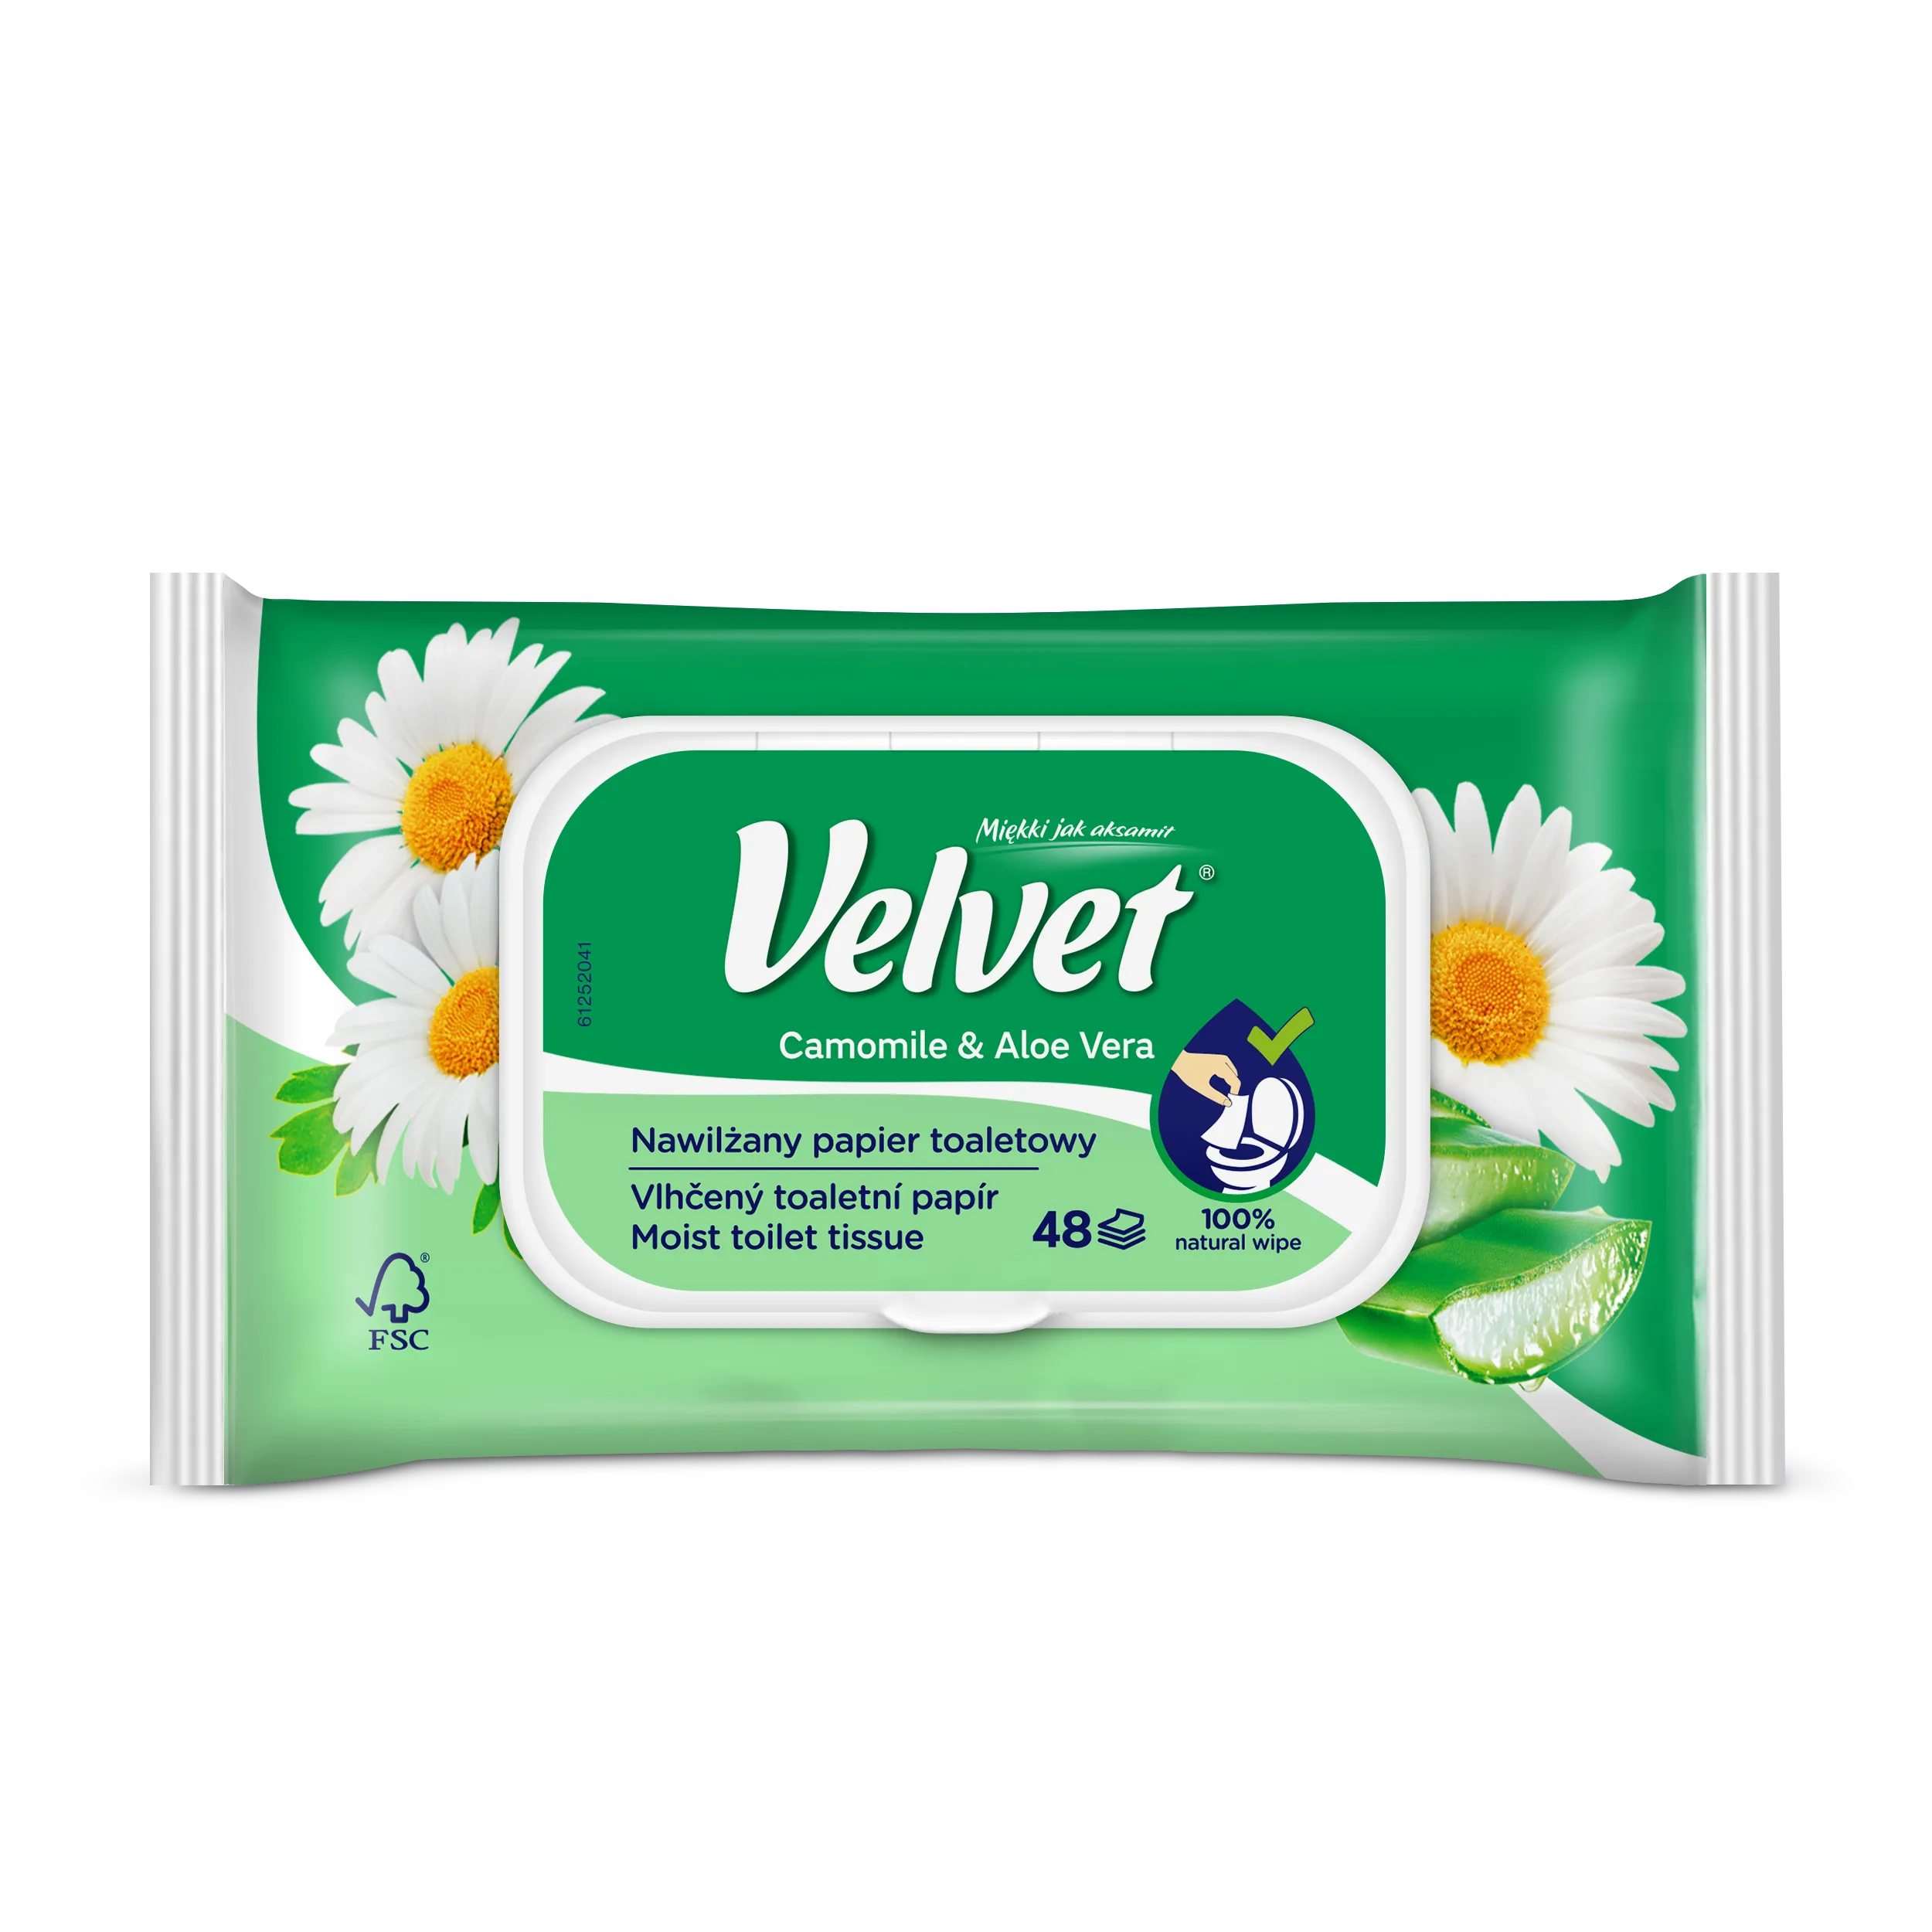 Velvet Camomile & Aloe Vera nawilżany papier toaletowy, 1 szt.